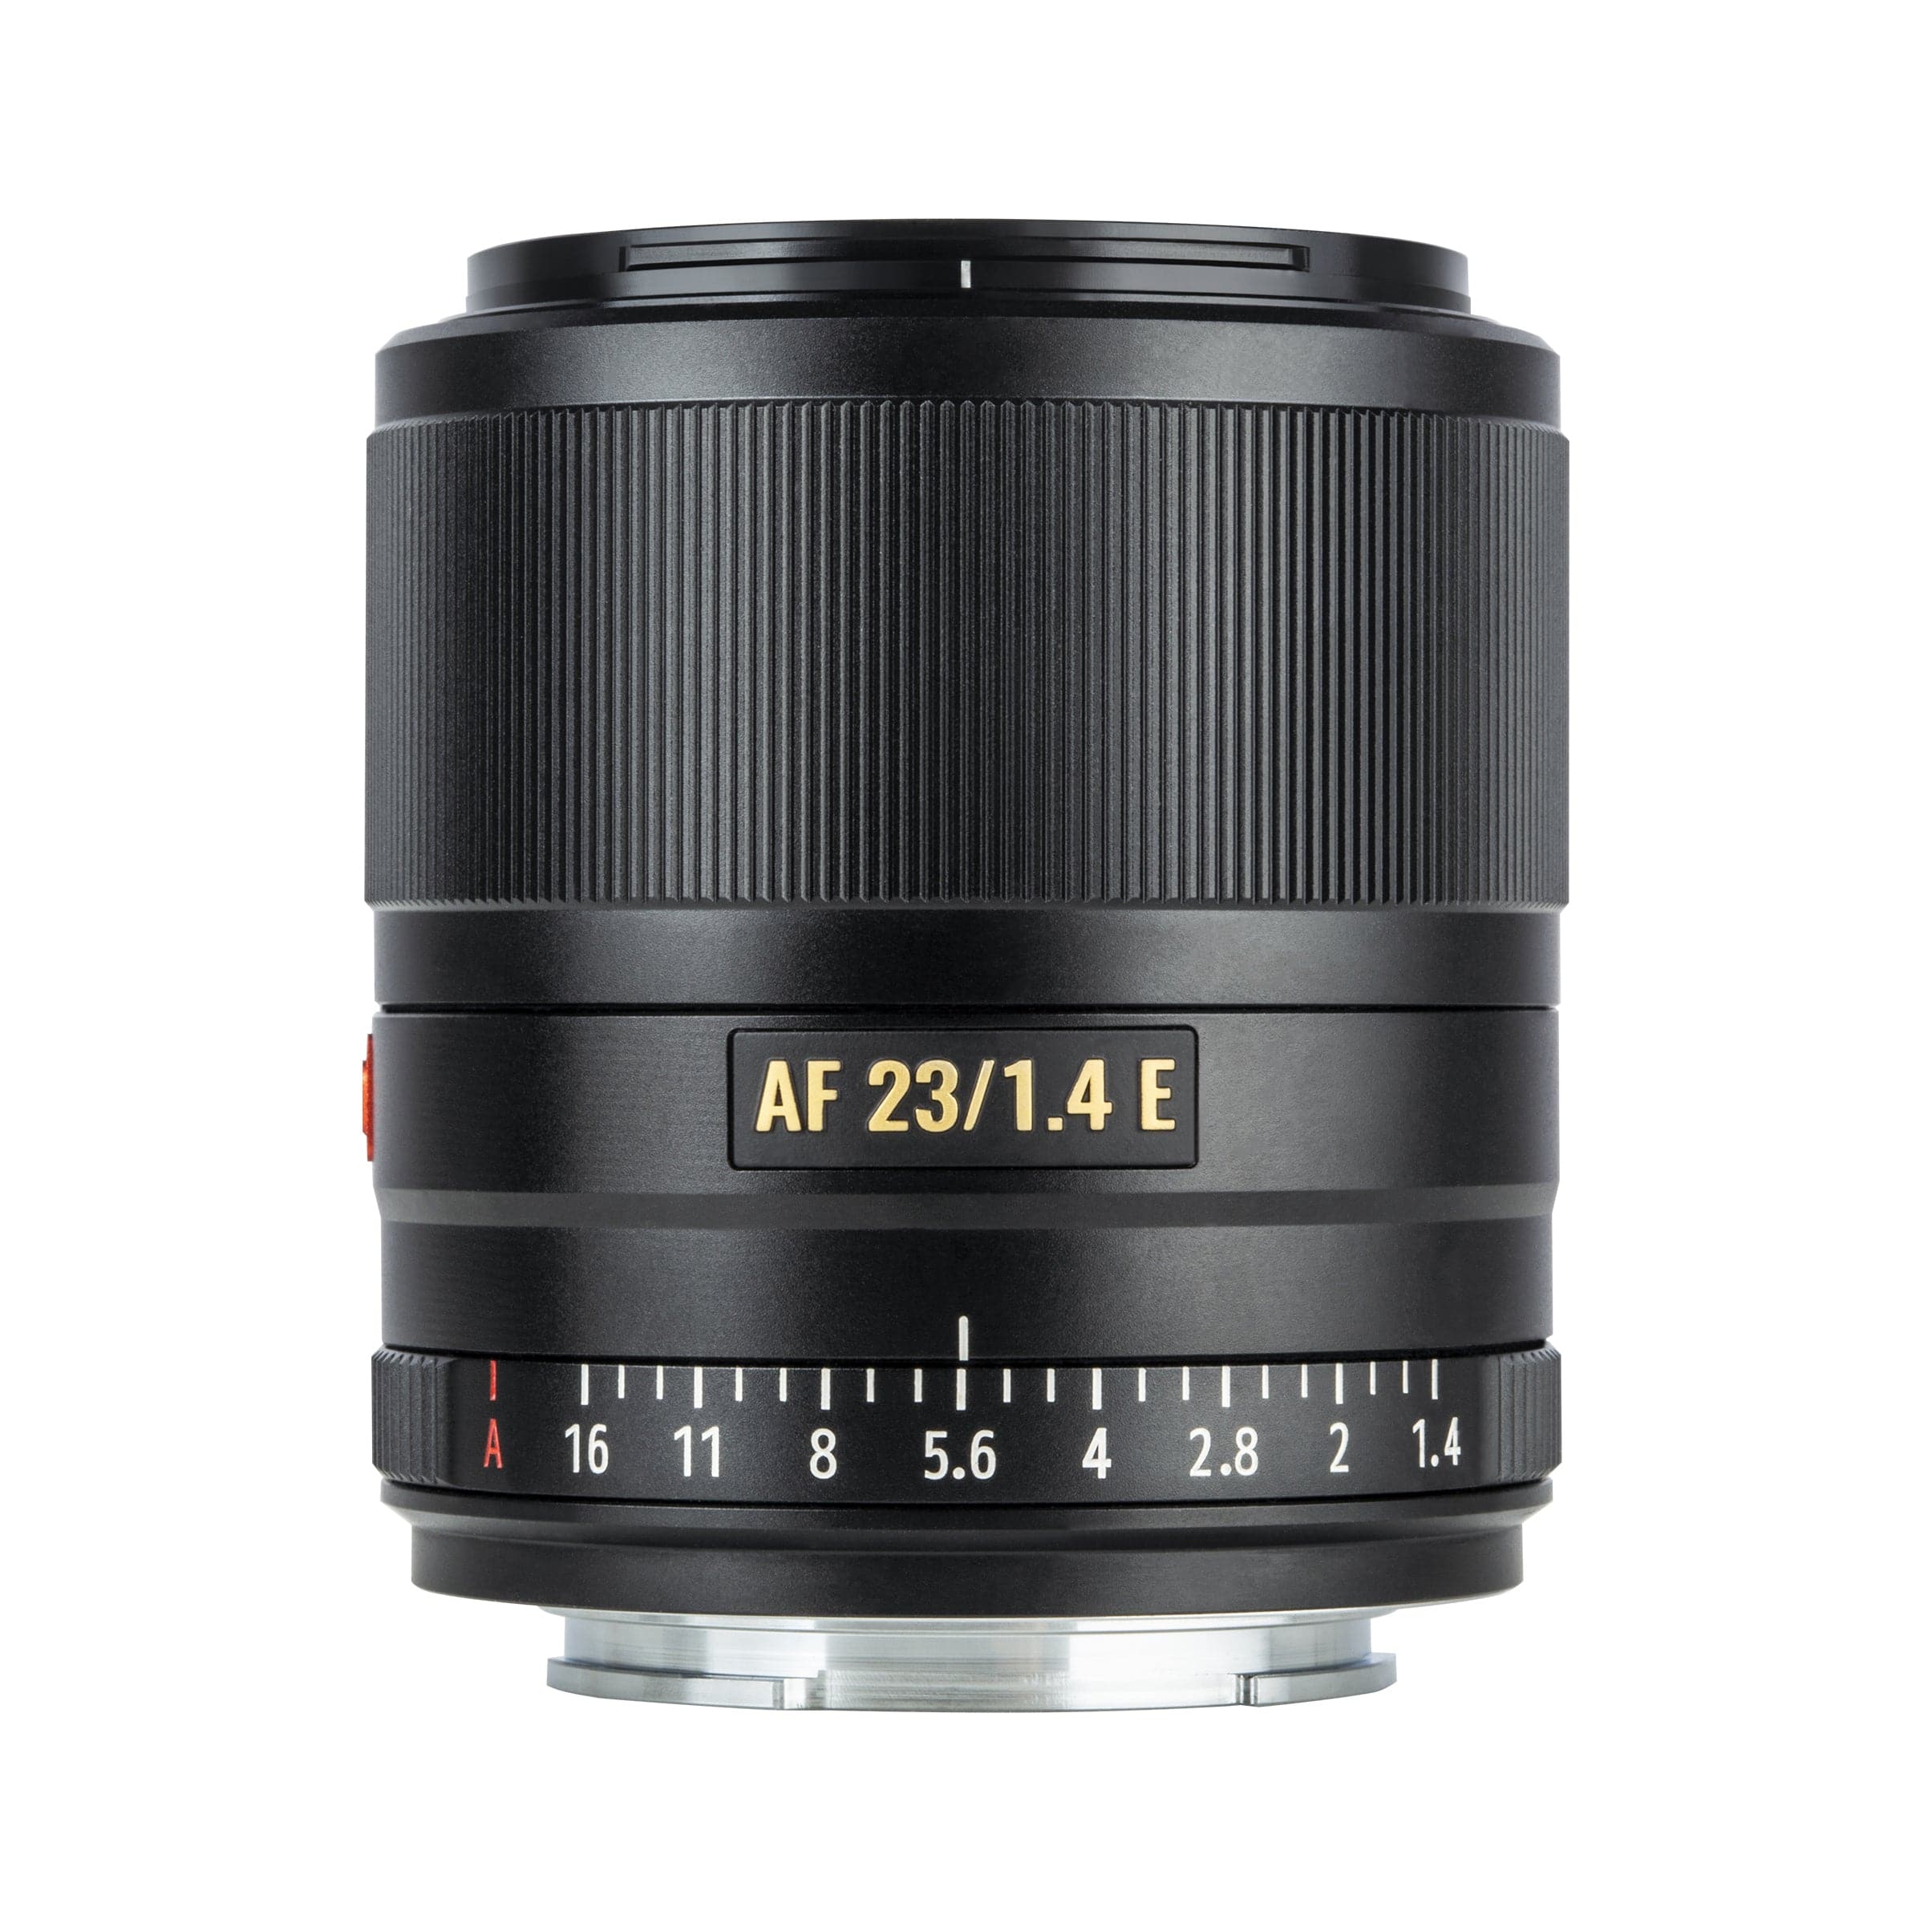 NEW Viltrox 23mm f1.4 E Auto Focus APS-C Prime Lens for Sony E-mount C